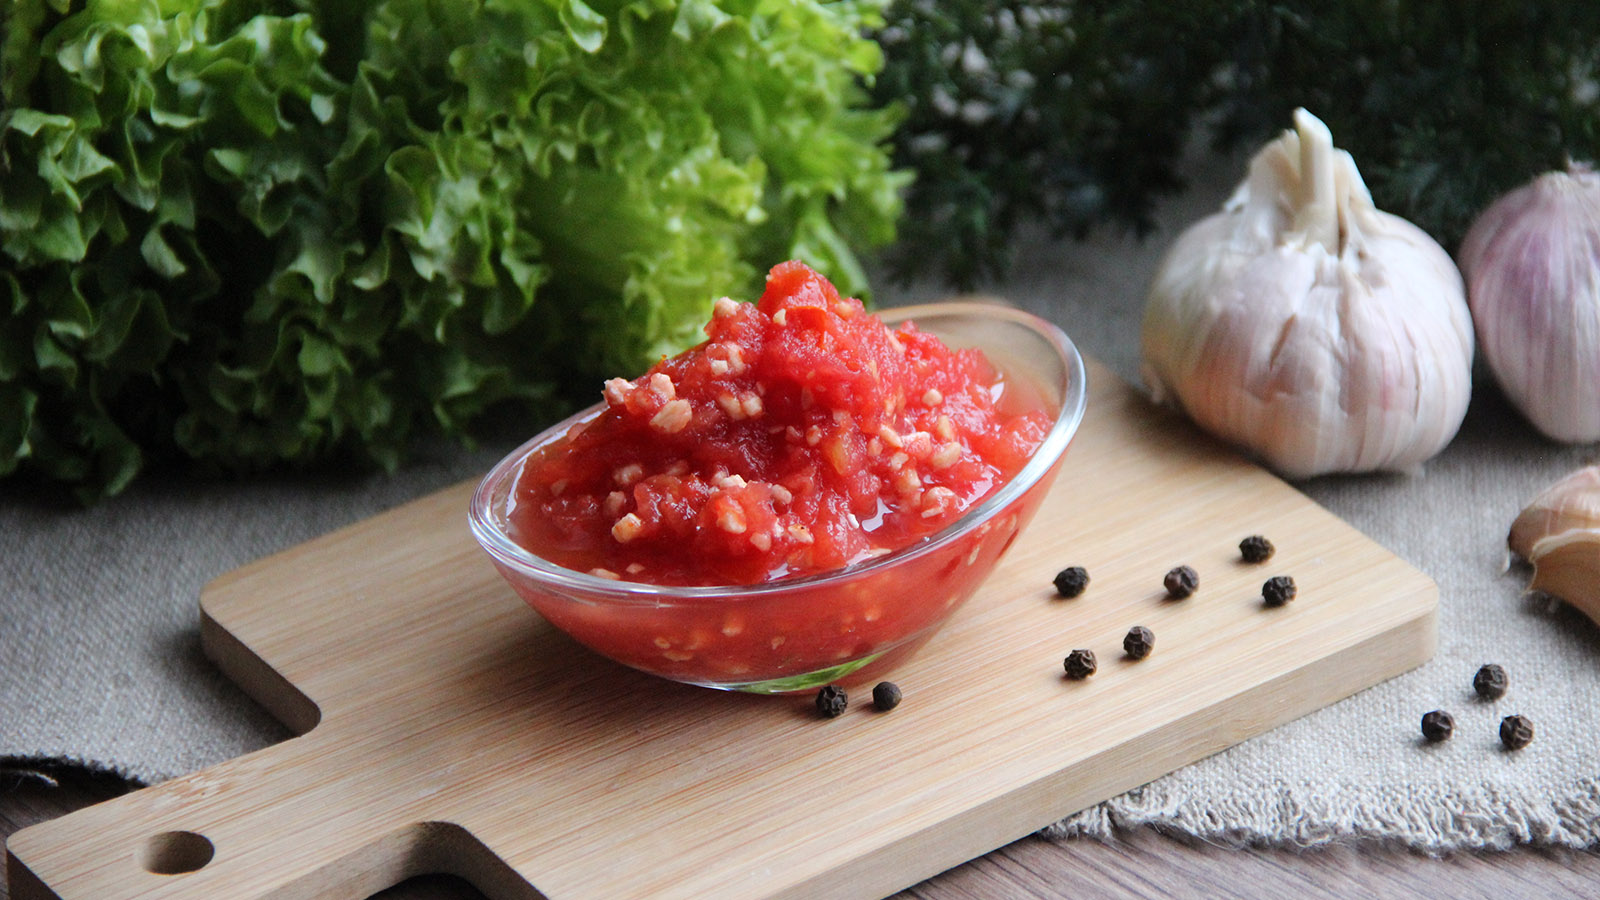 Хреновина (хренодер) из помидоров и хрена - 10 рецептов с фото пошагово